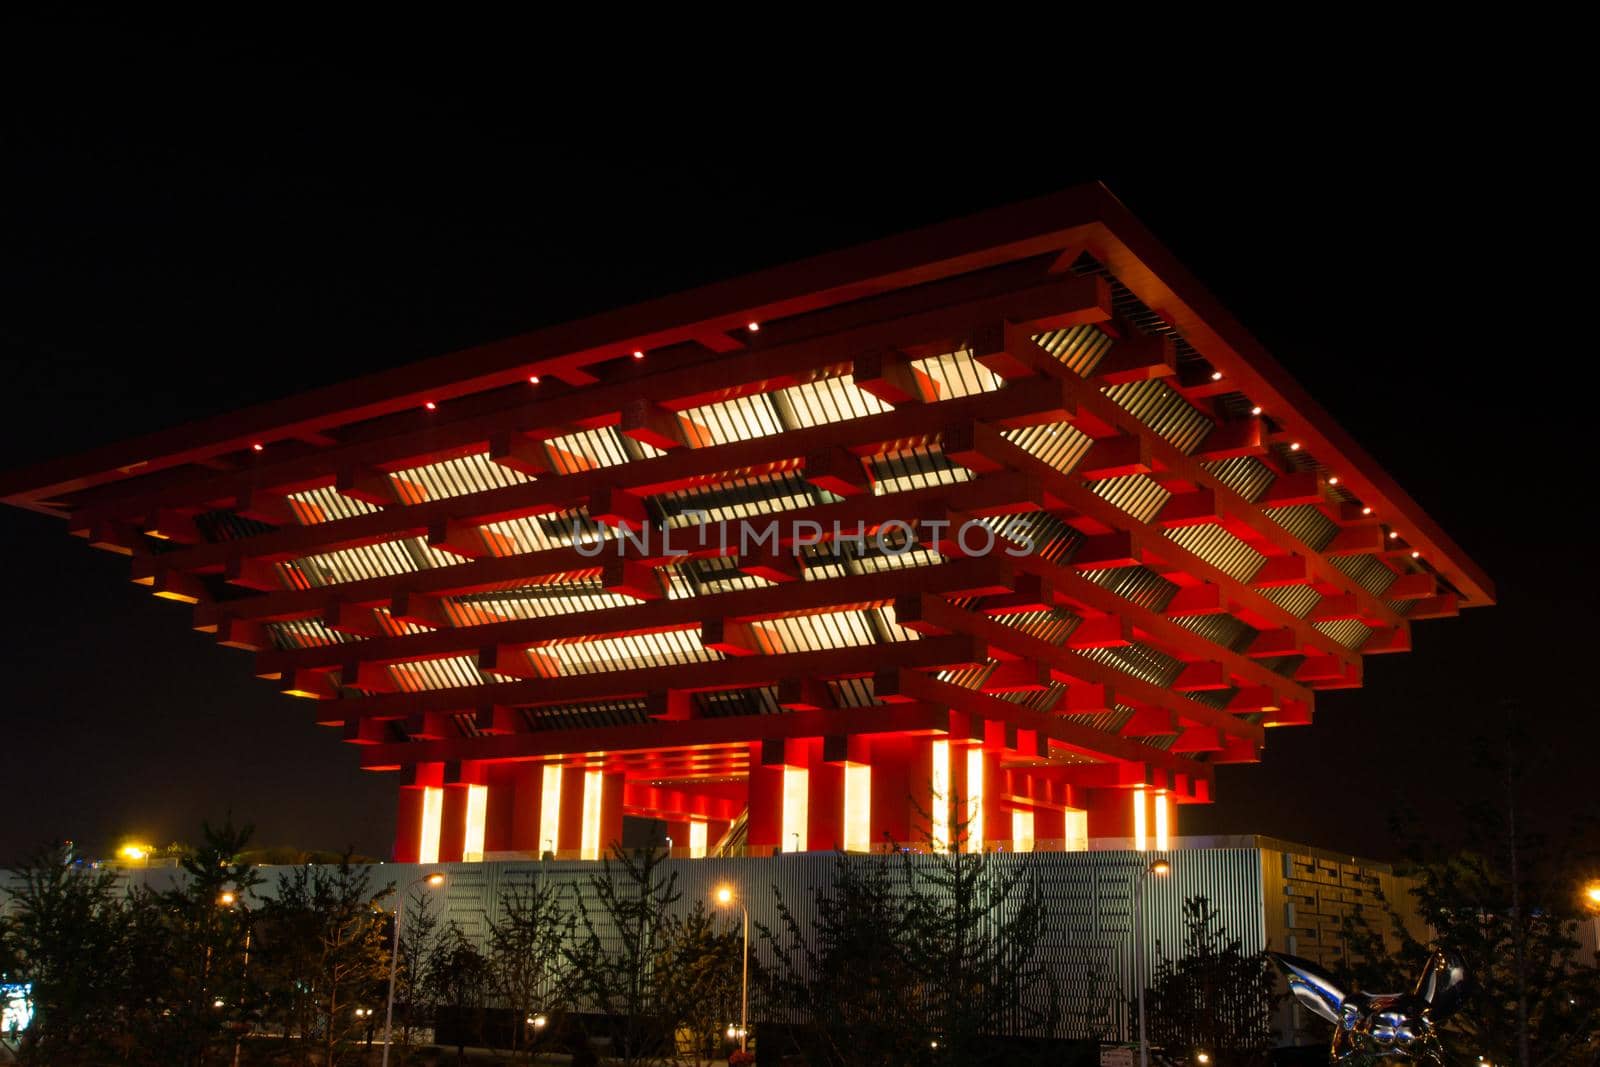 Exterior of the China Pavilion at the EXPO 2010 Shanghai, China.